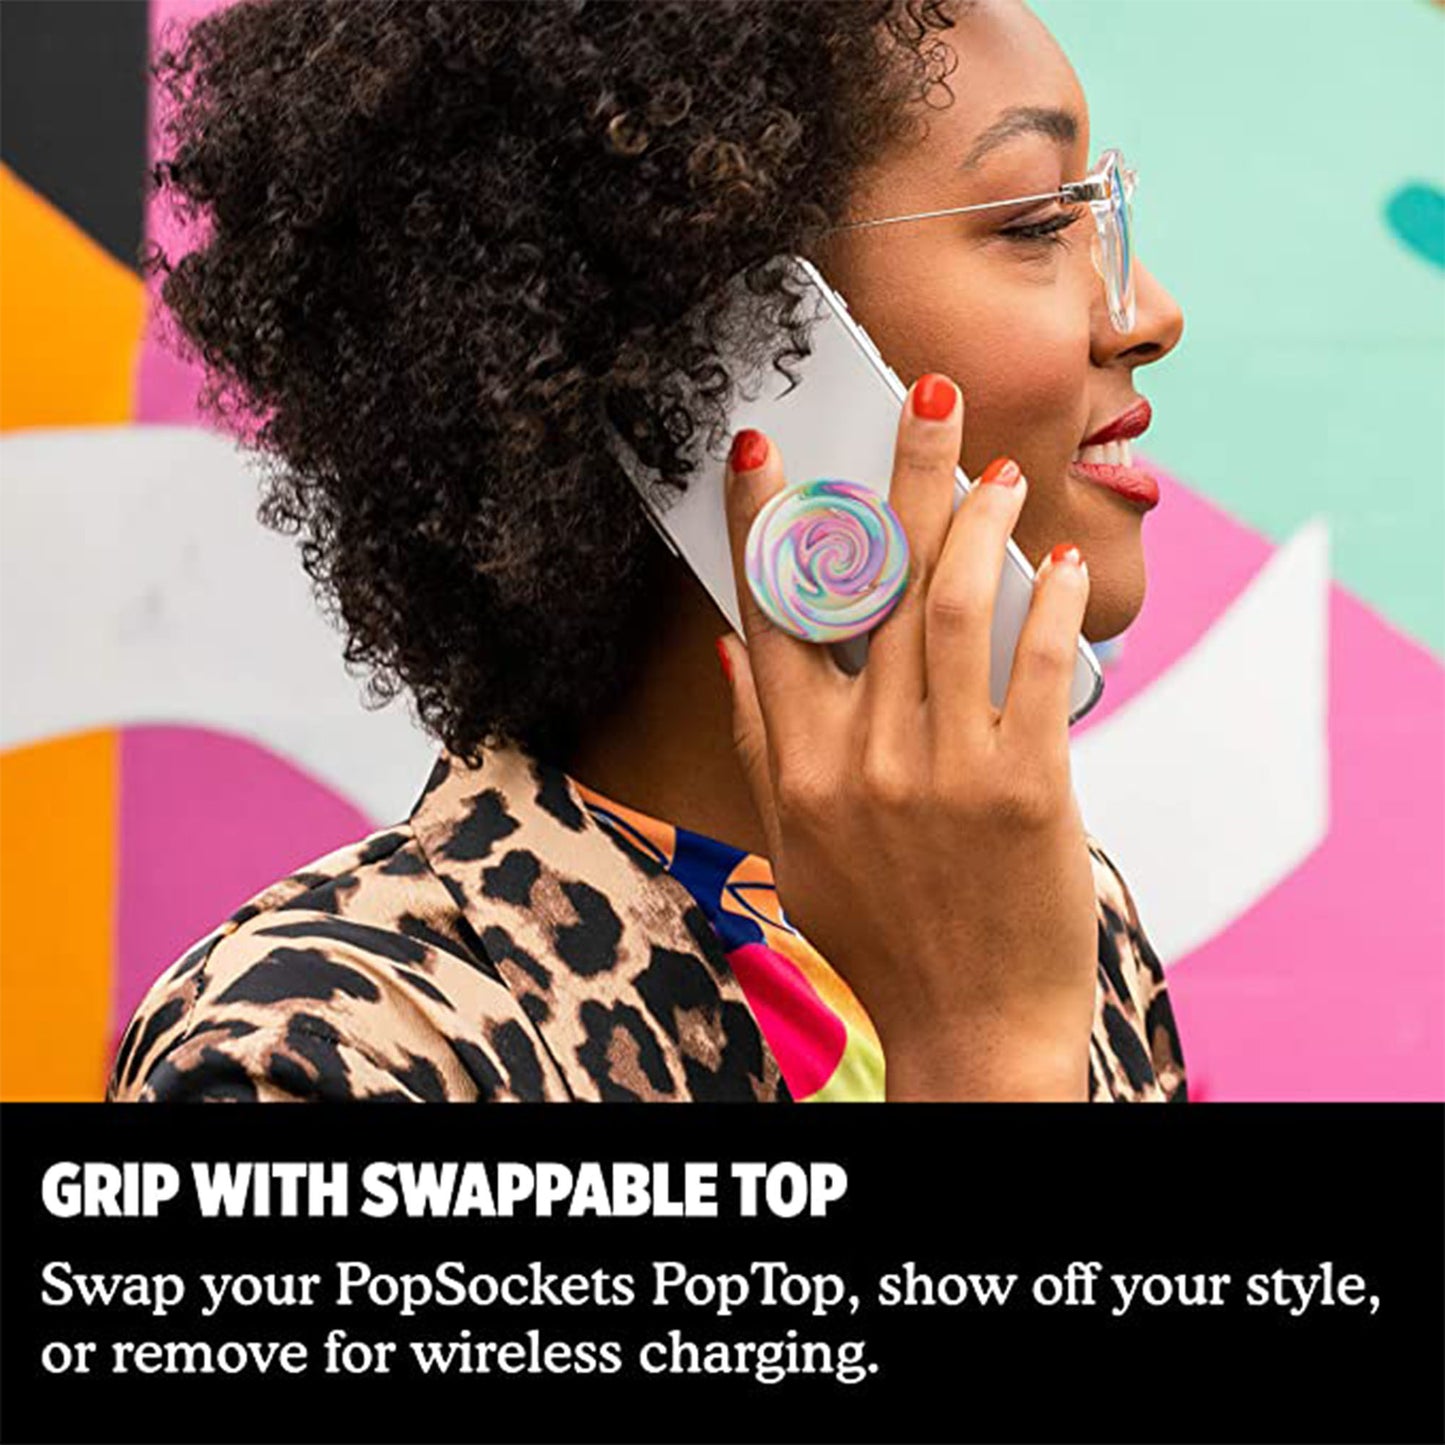 Popsockets Popgrip Graphics - Jawbreaker Gloss (Barcode: 842978154855 )